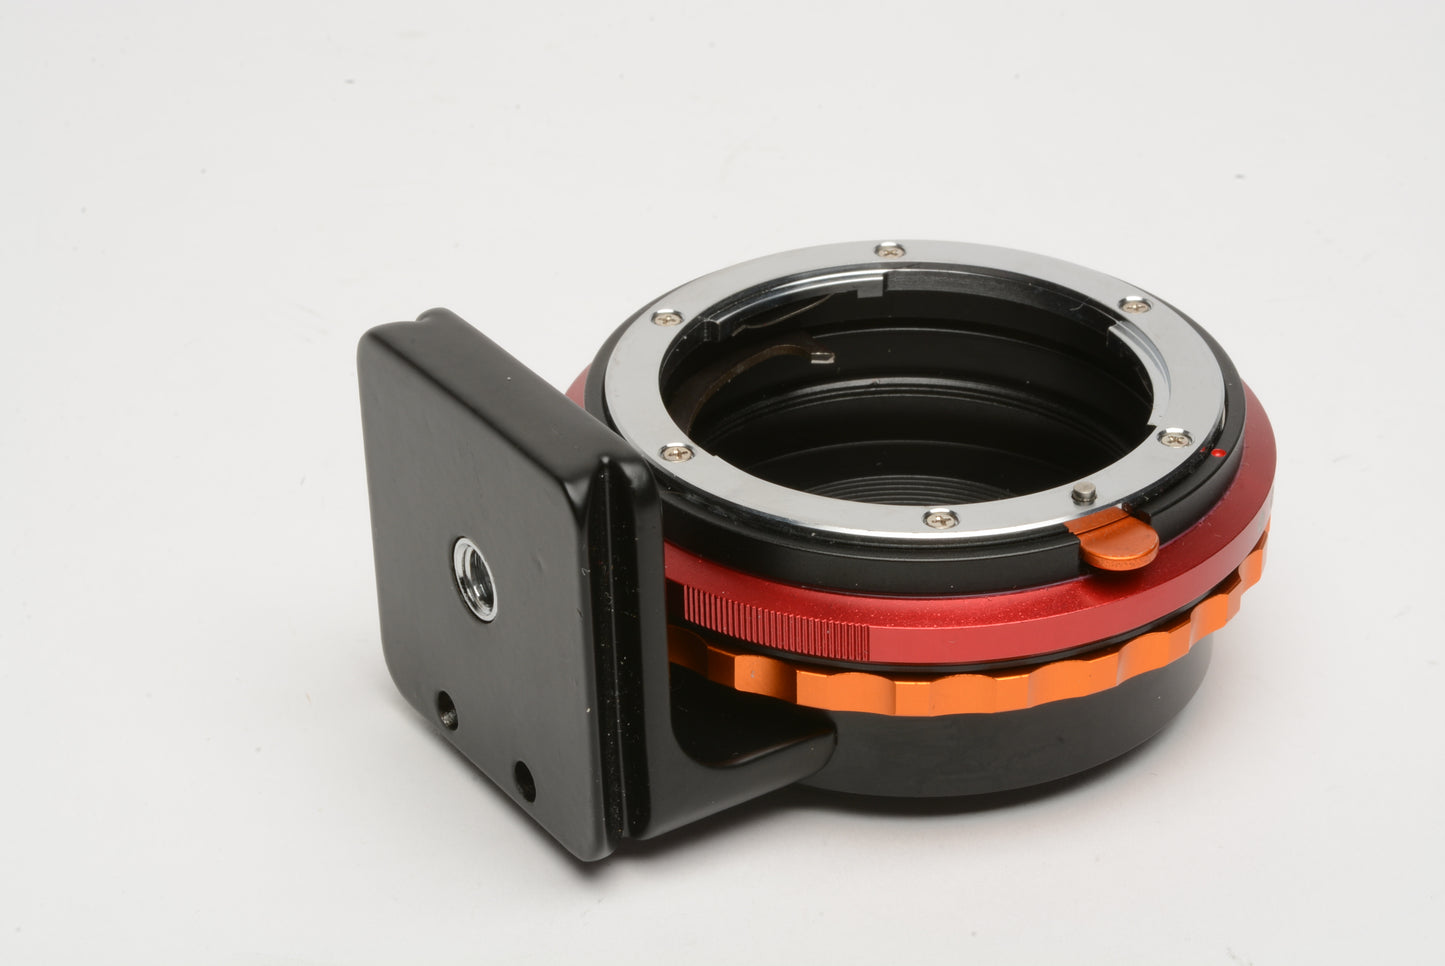 FotodioX Nikon F G-Type Lens to Micro Four Thirds Camera DLX Series Adapter